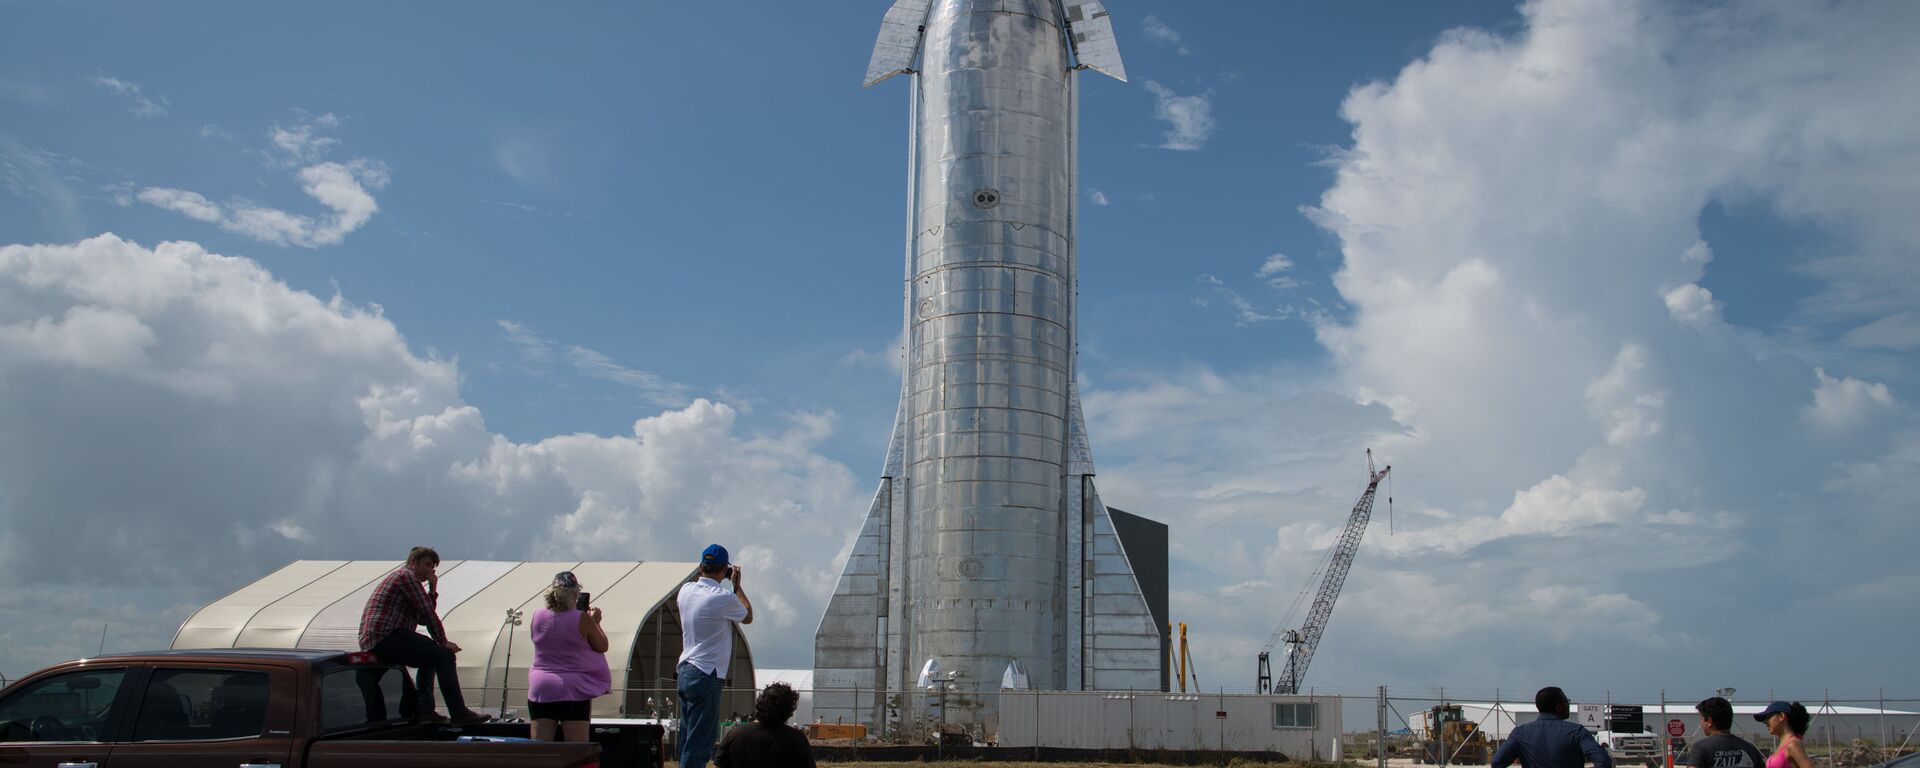 SpaceX測試Super Heavy超重火箭的發動機 - 俄羅斯衛星通訊社, 1920, 20.07.2021